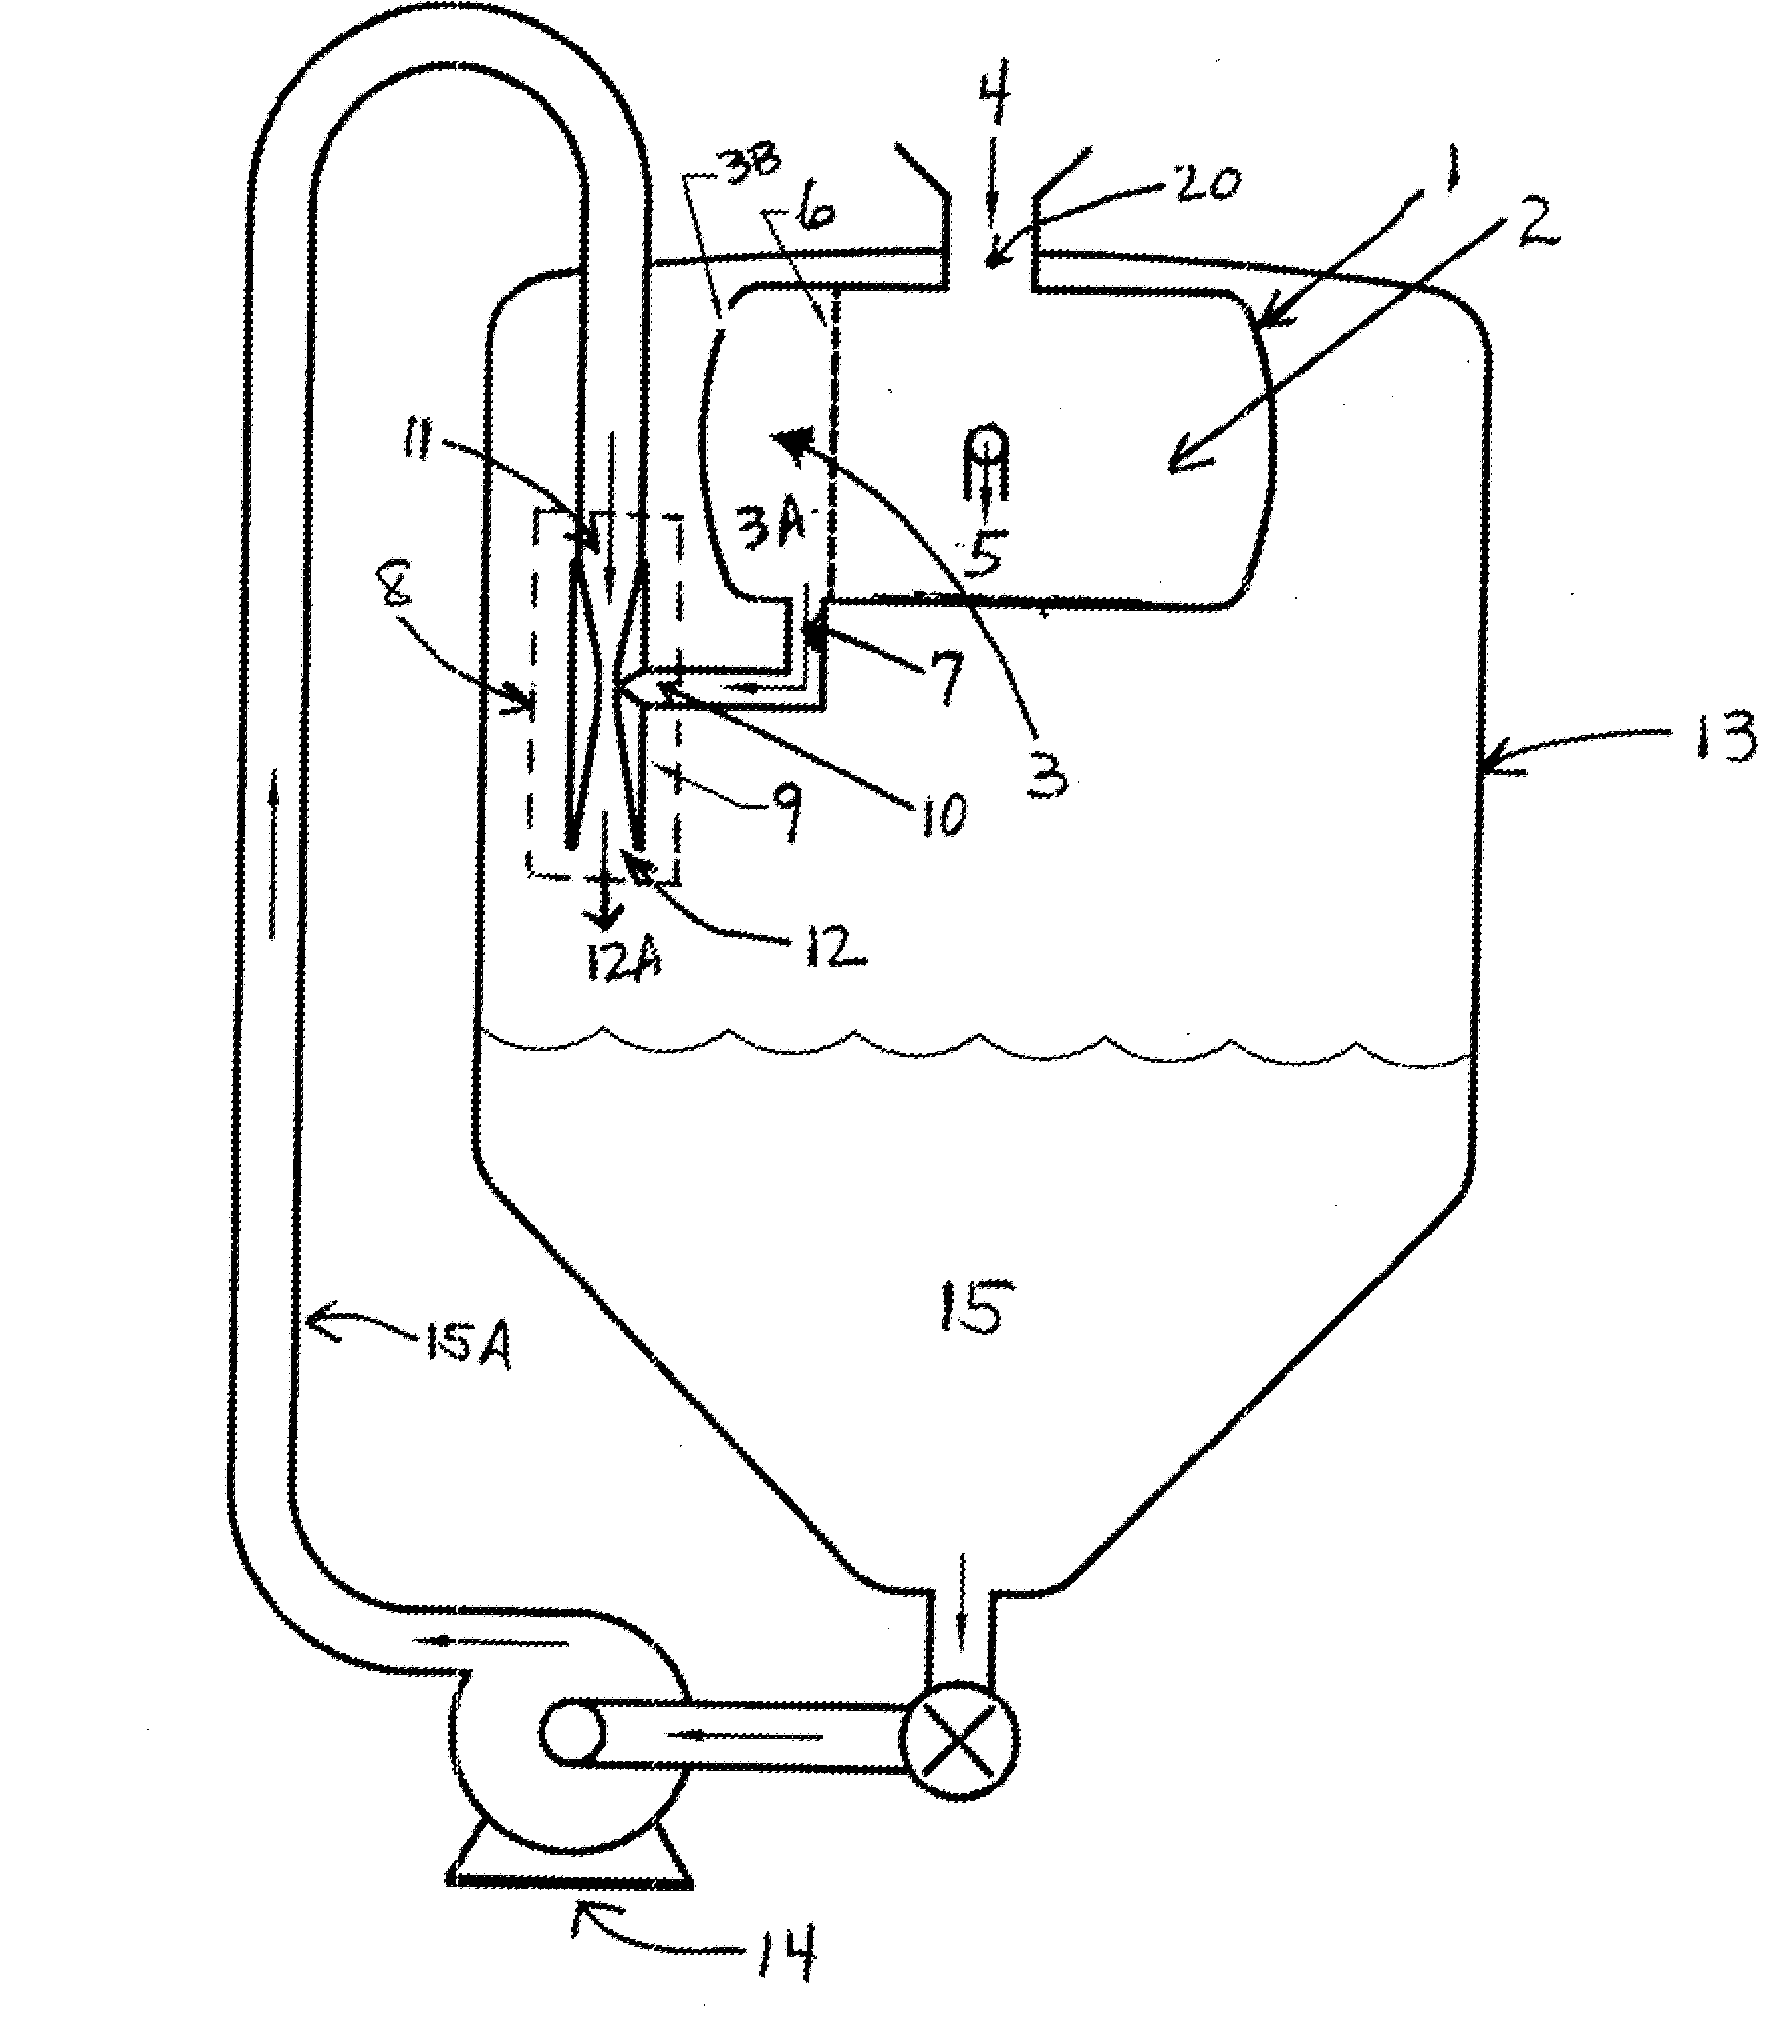 Transesterification catalyst mixing system